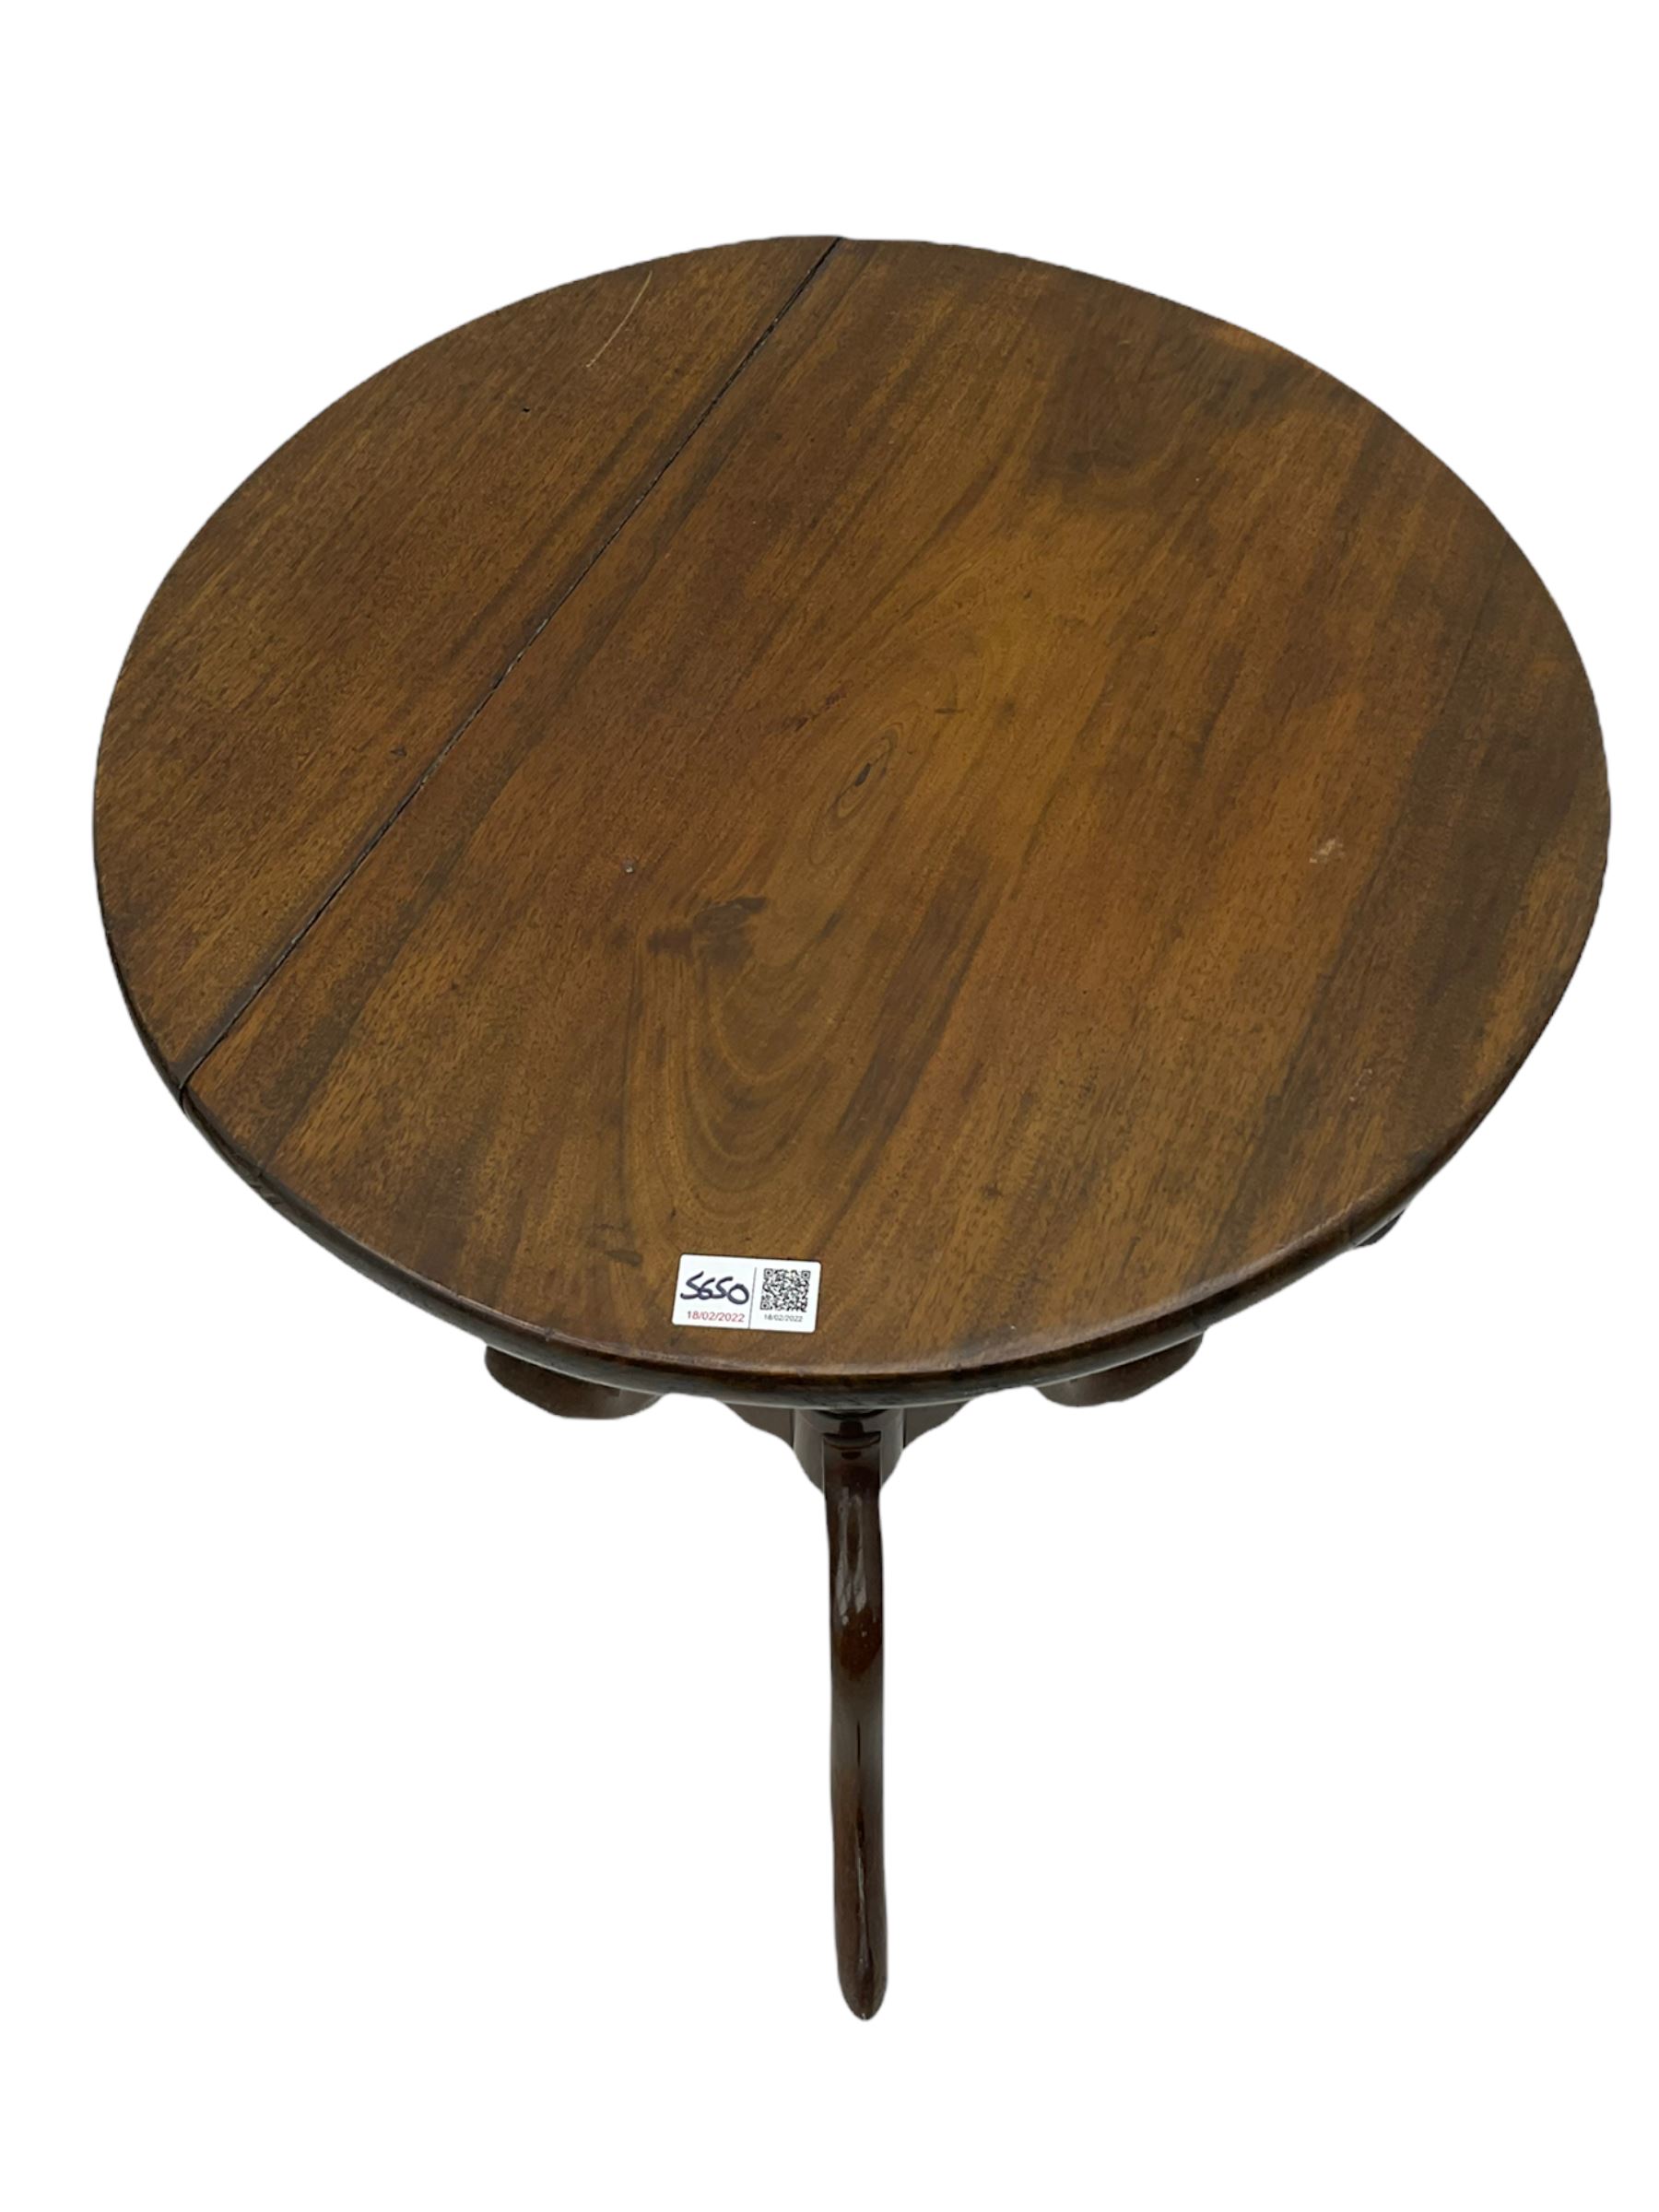 George III mahogany side table - Image 11 of 13